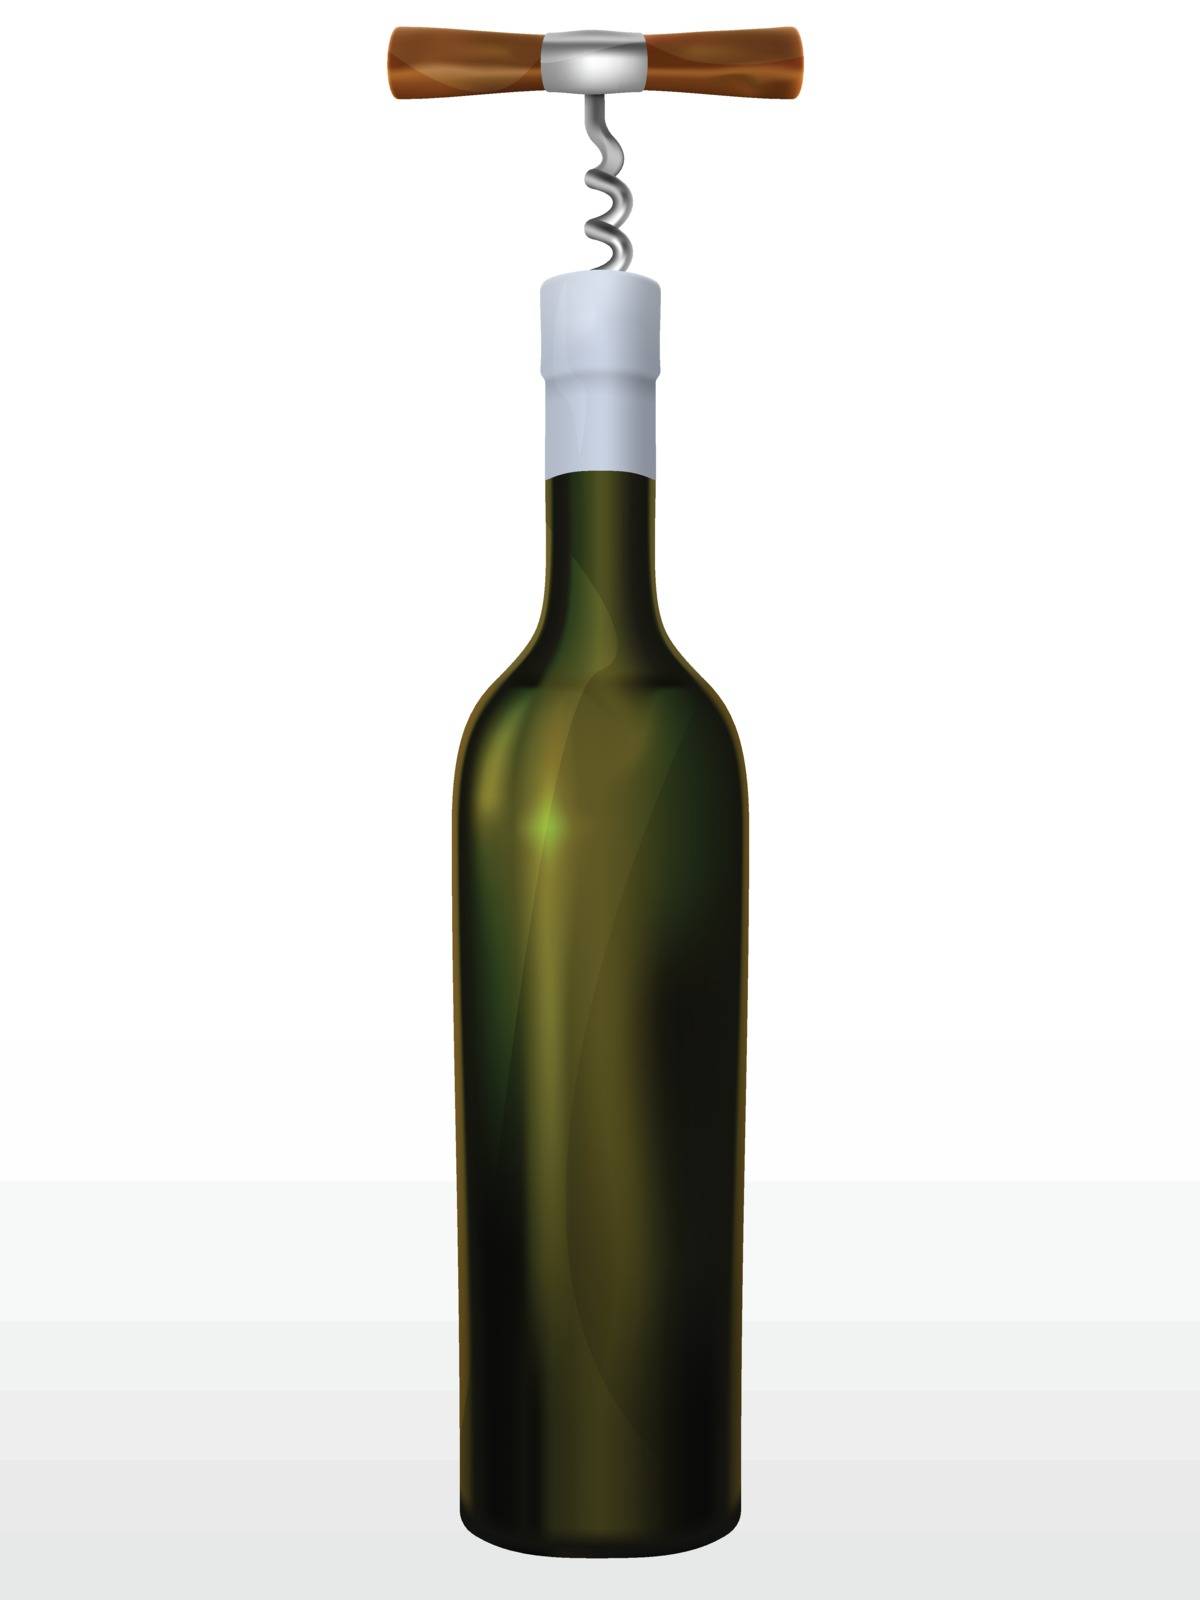 Bottle of wine and corkscrew in a vector mesh gradient